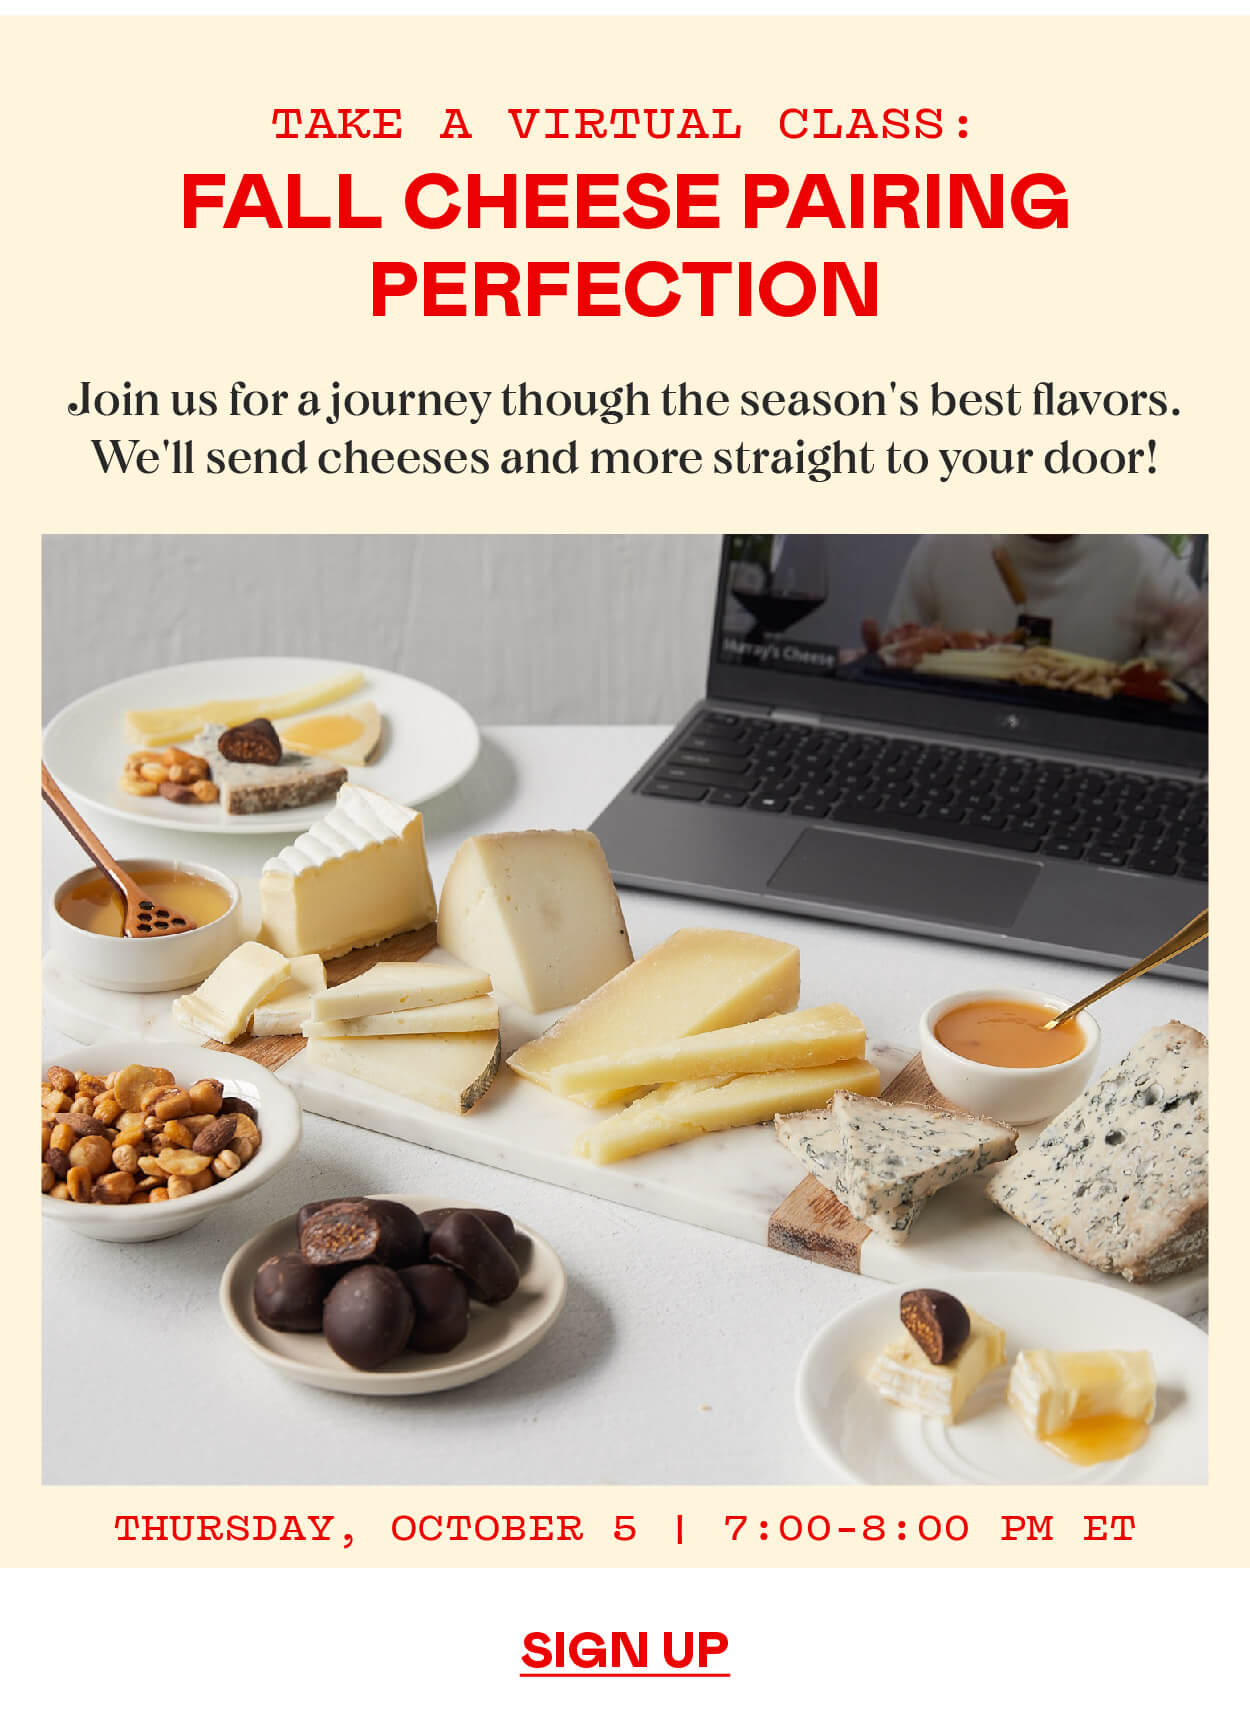 Virtual Fall Cheese Pairing Perfection Class